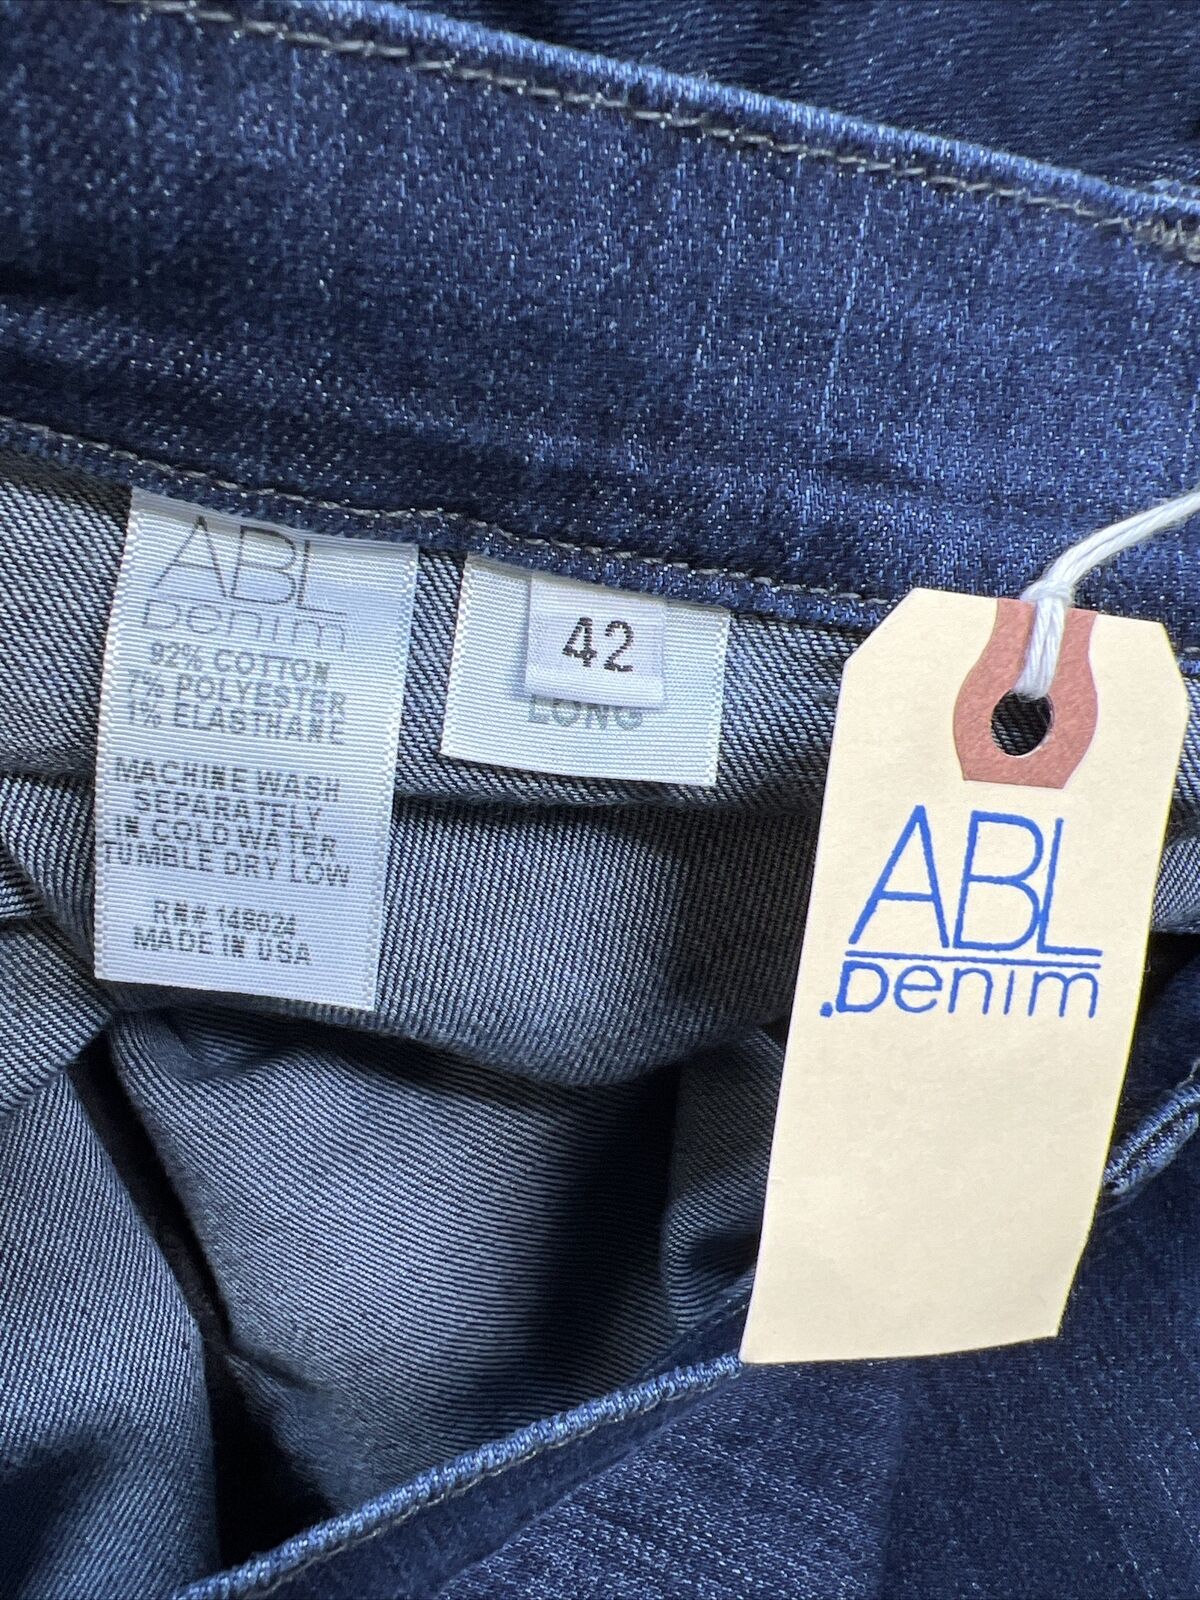 NEW ABL Denim Women's Dark Wash Accessible Classic Jeans - 42 Long